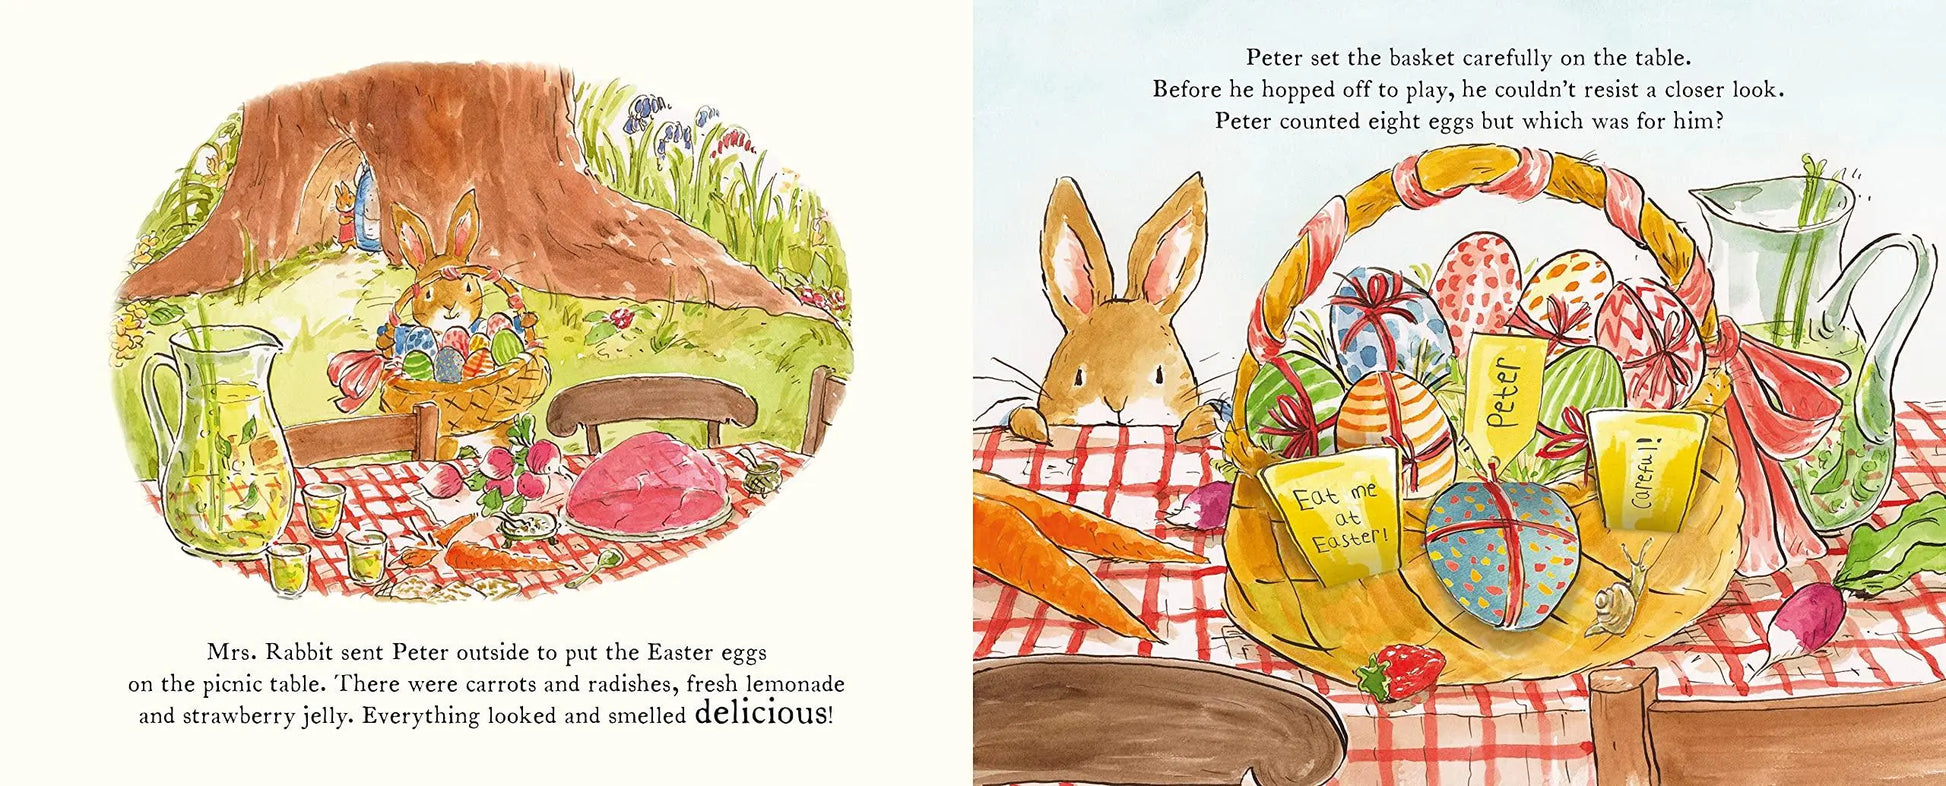 Peter Rabbit Great Big Easter Egg Hunt - Bookspeed - The Forgotten Toy Shop